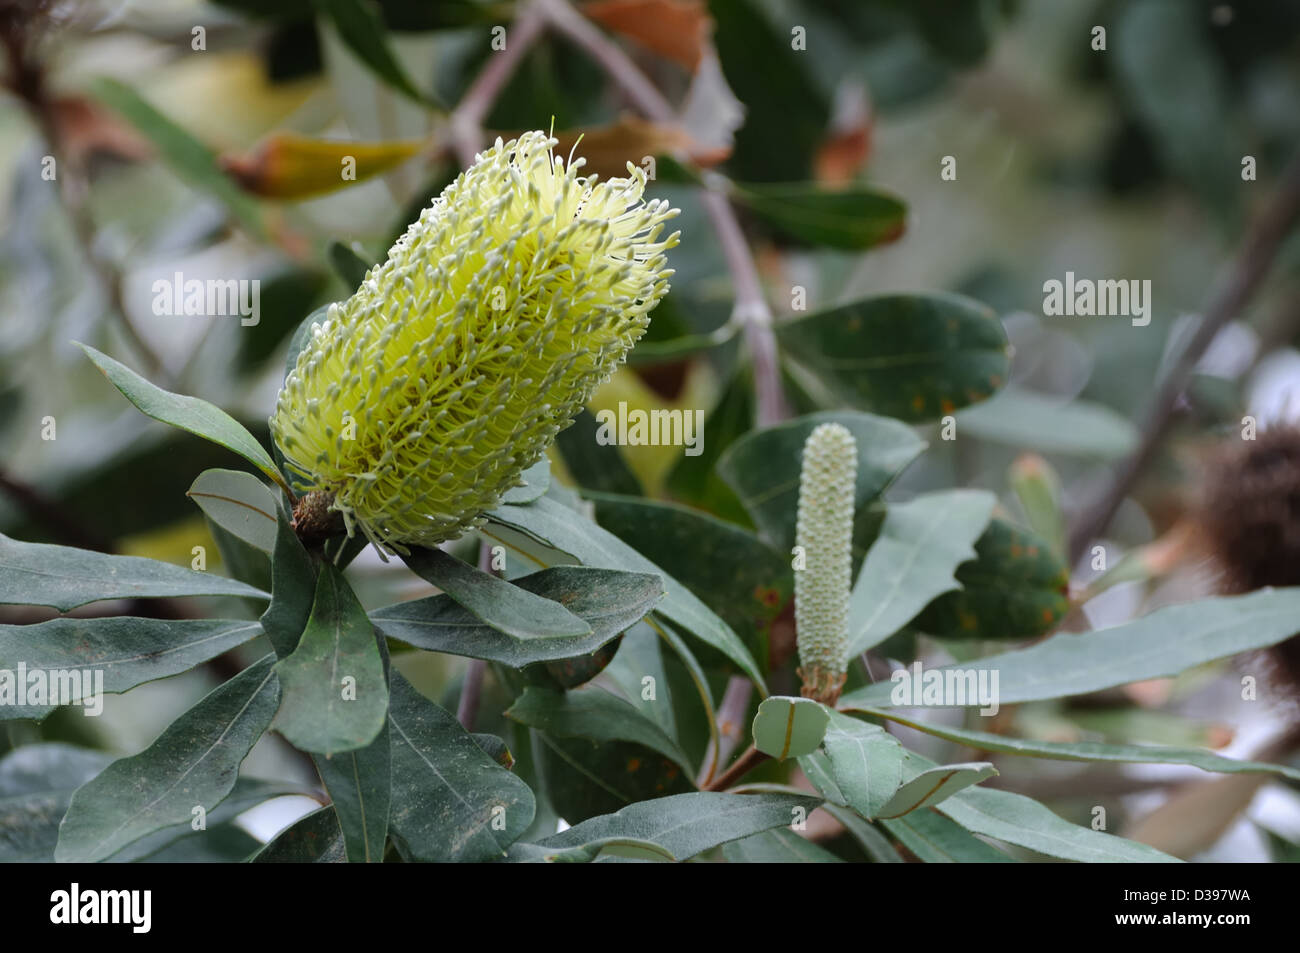 Banksia tree in flower. Stock Photo